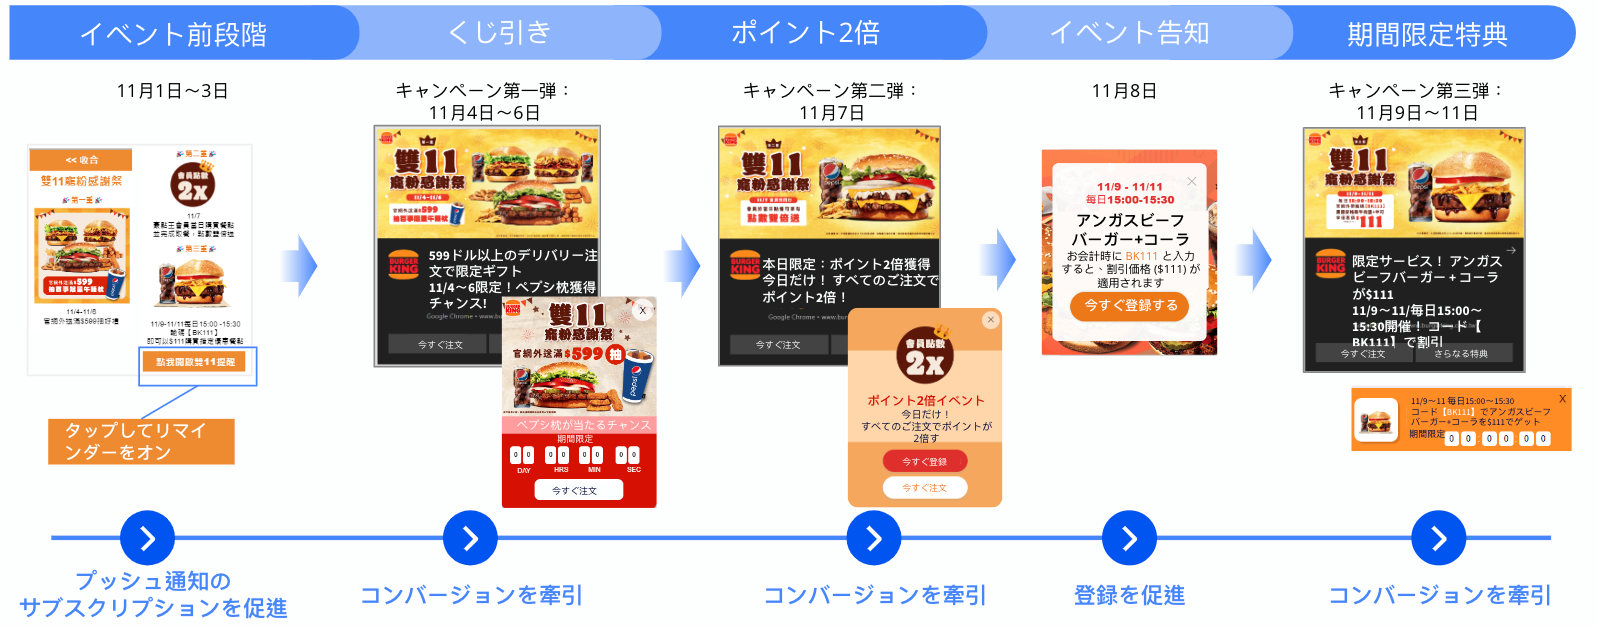 Burger King_光棍節中のクロスチャネルキャンペーンの連続展開でエンゲージメントとCVRを向上